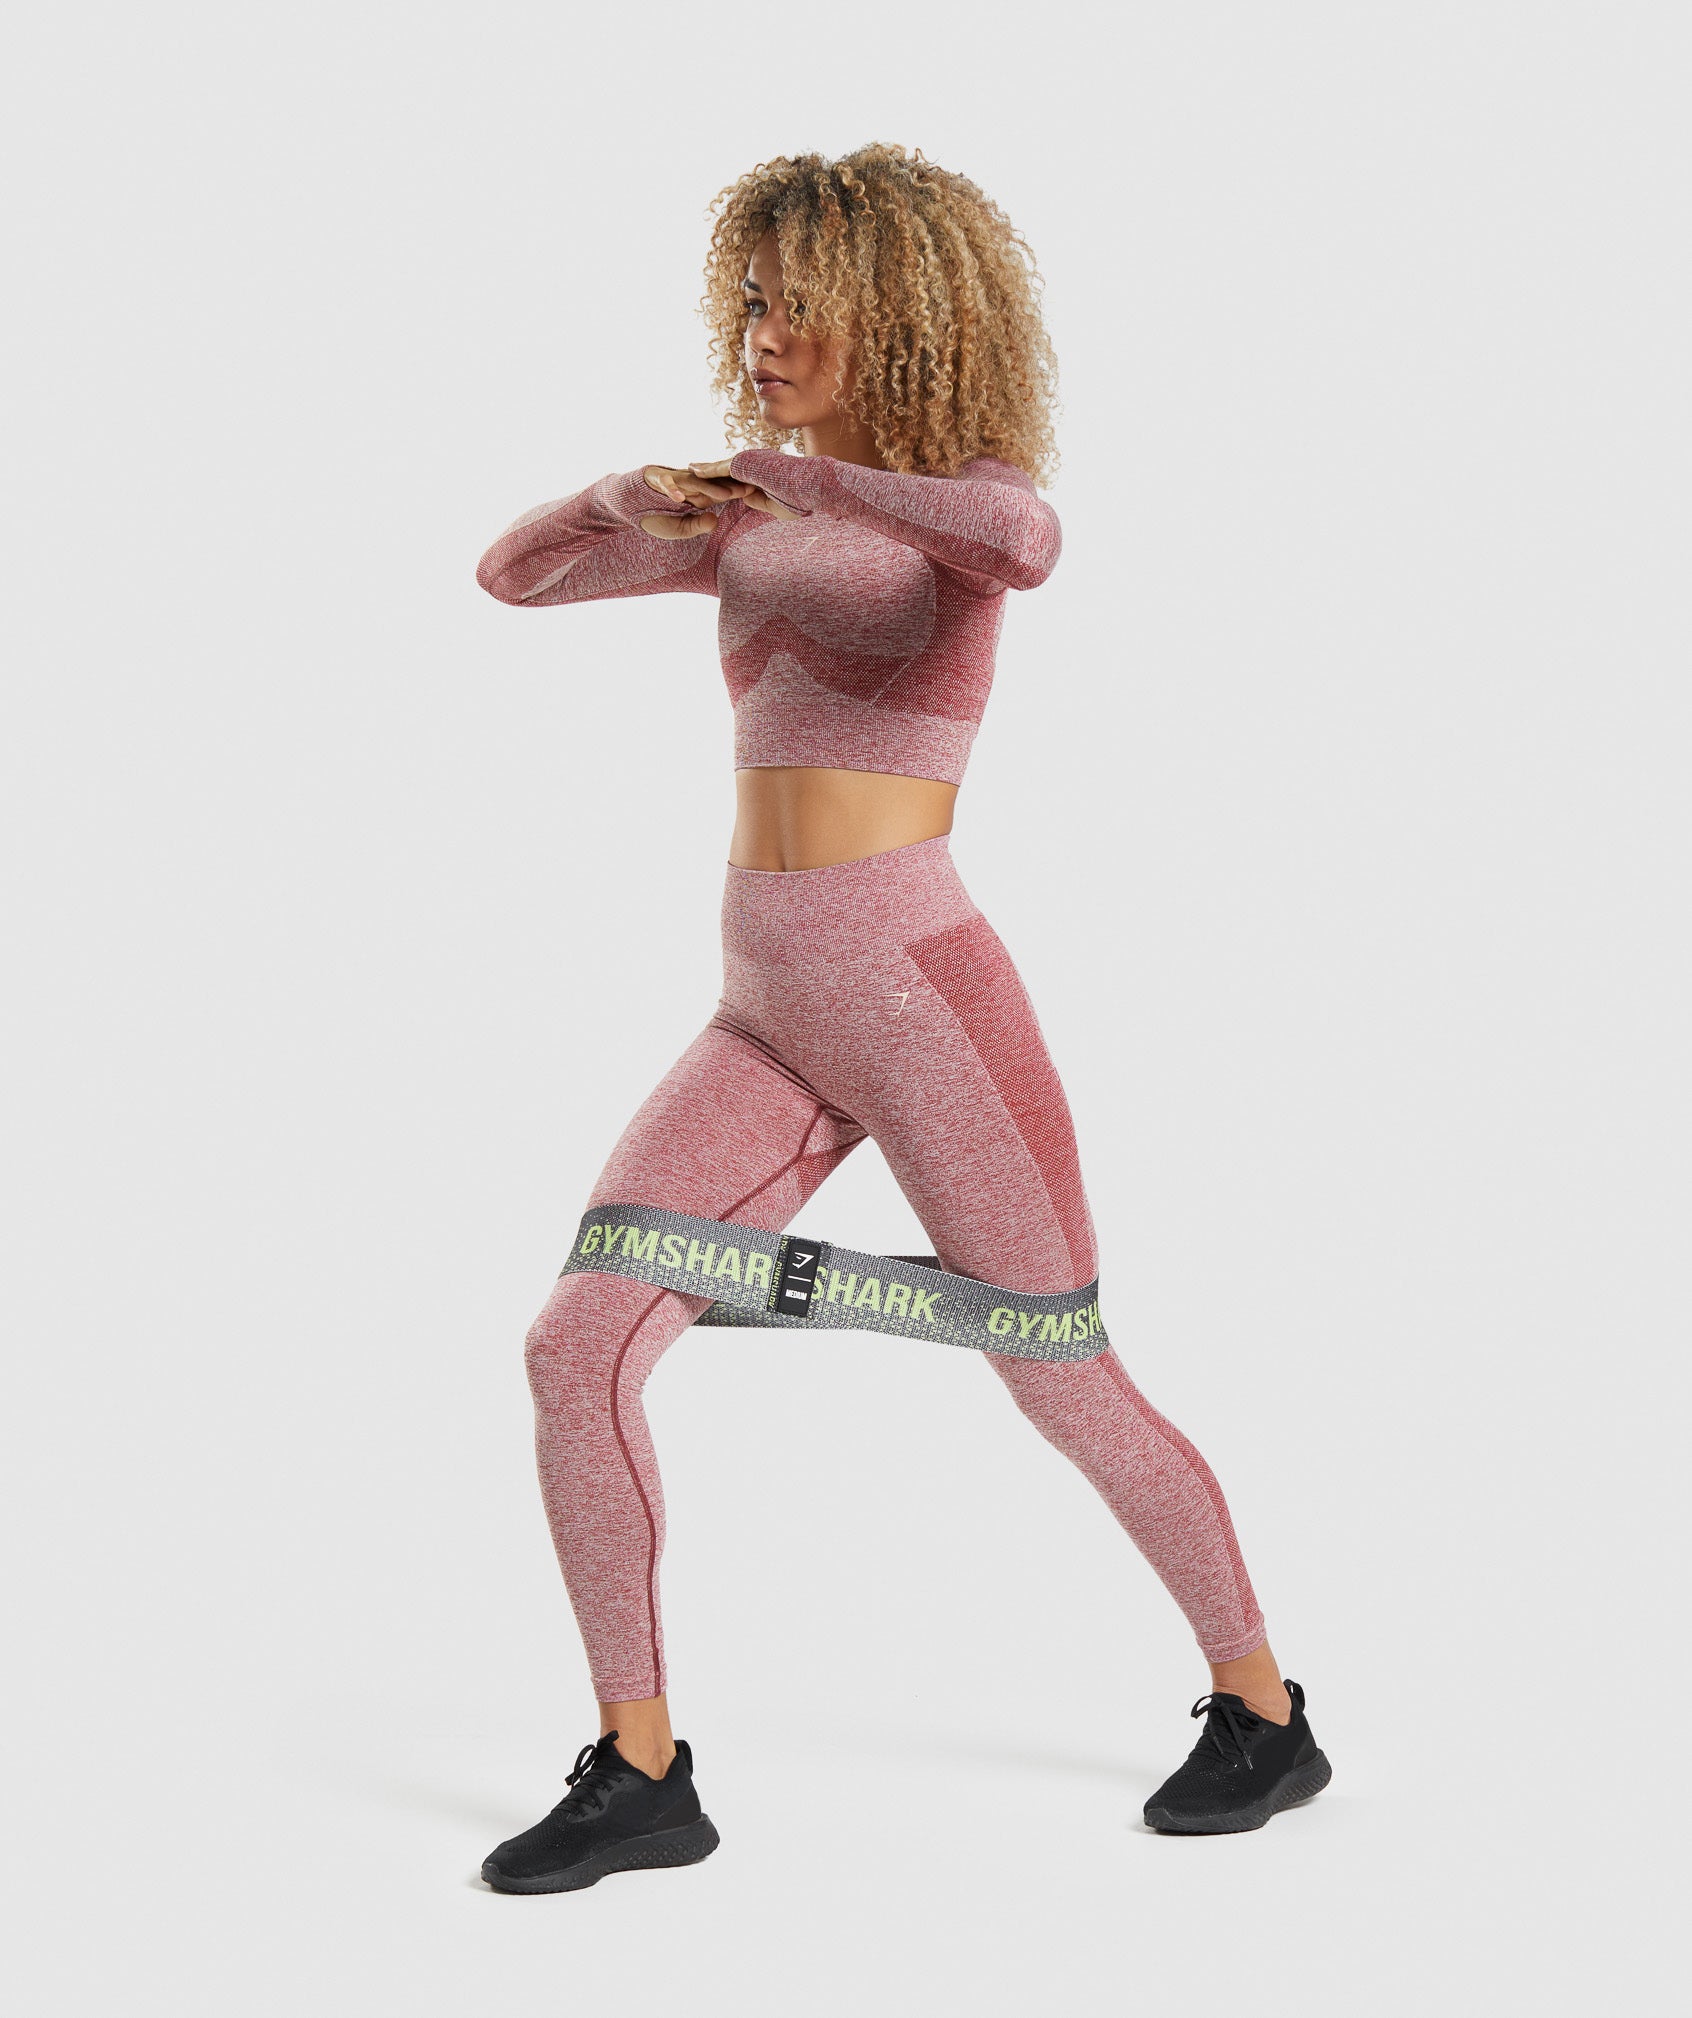 Brooklyn 1986  Flex leggings, Gymshark flex leggings, Workout clothes